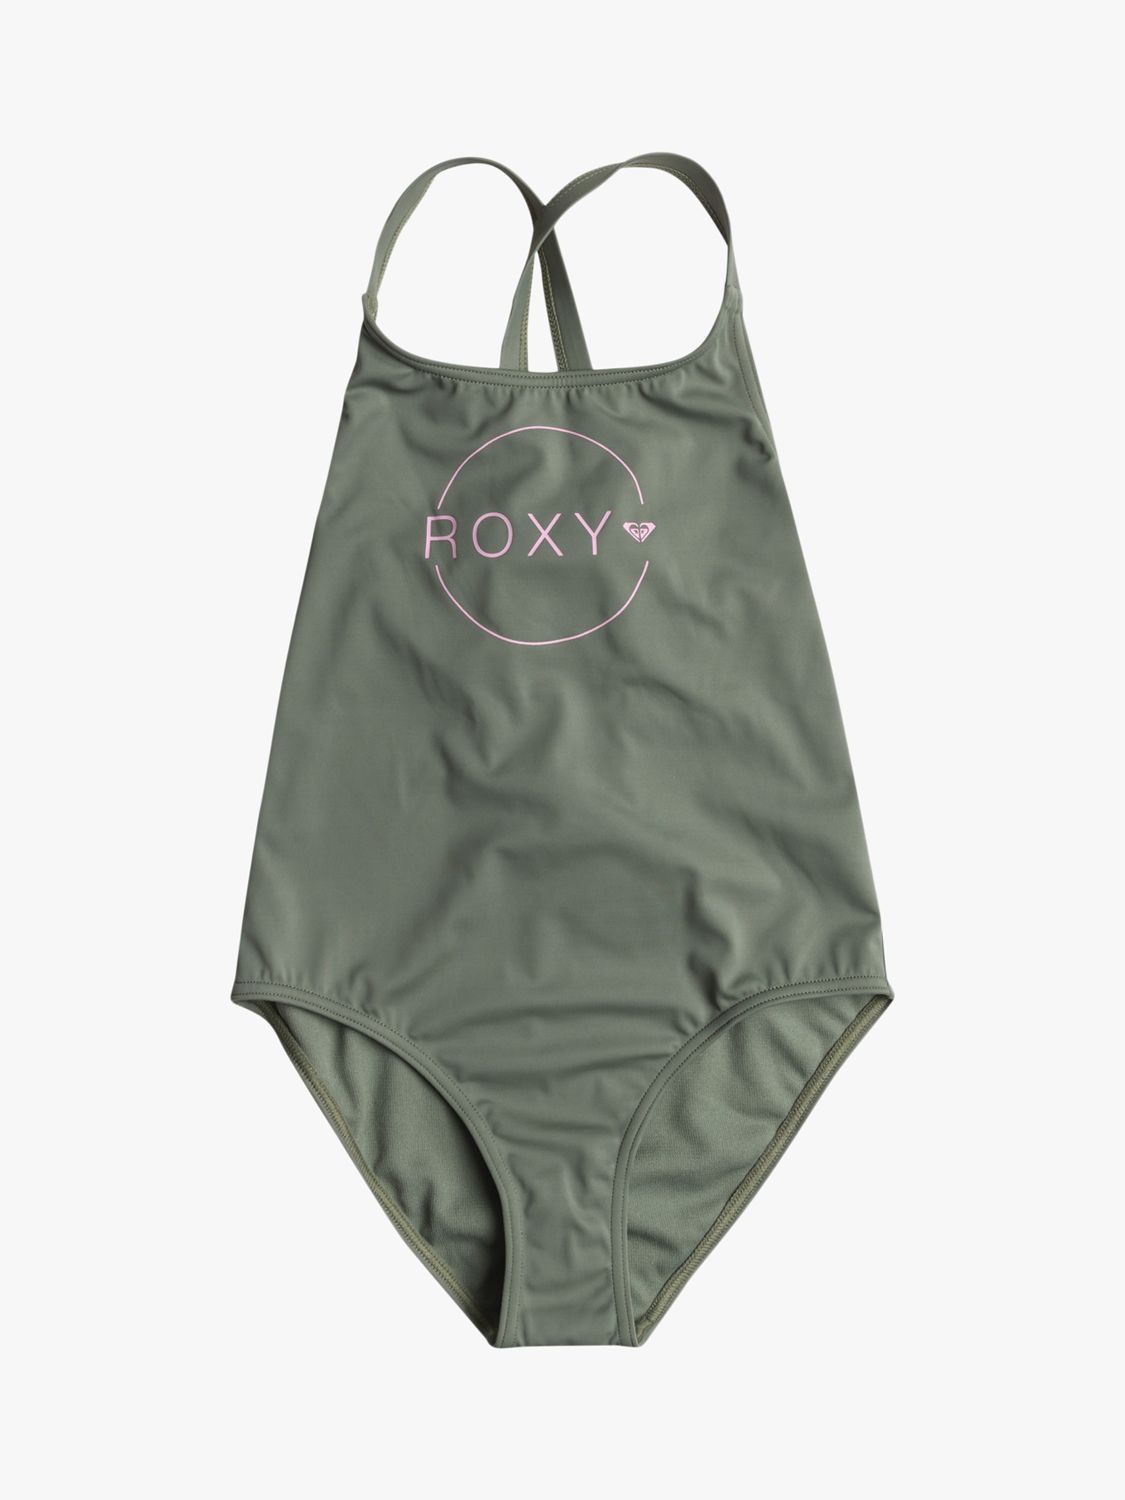 Roxy Kids' Basic Logo Swimsuit, Agave Green, 14 years